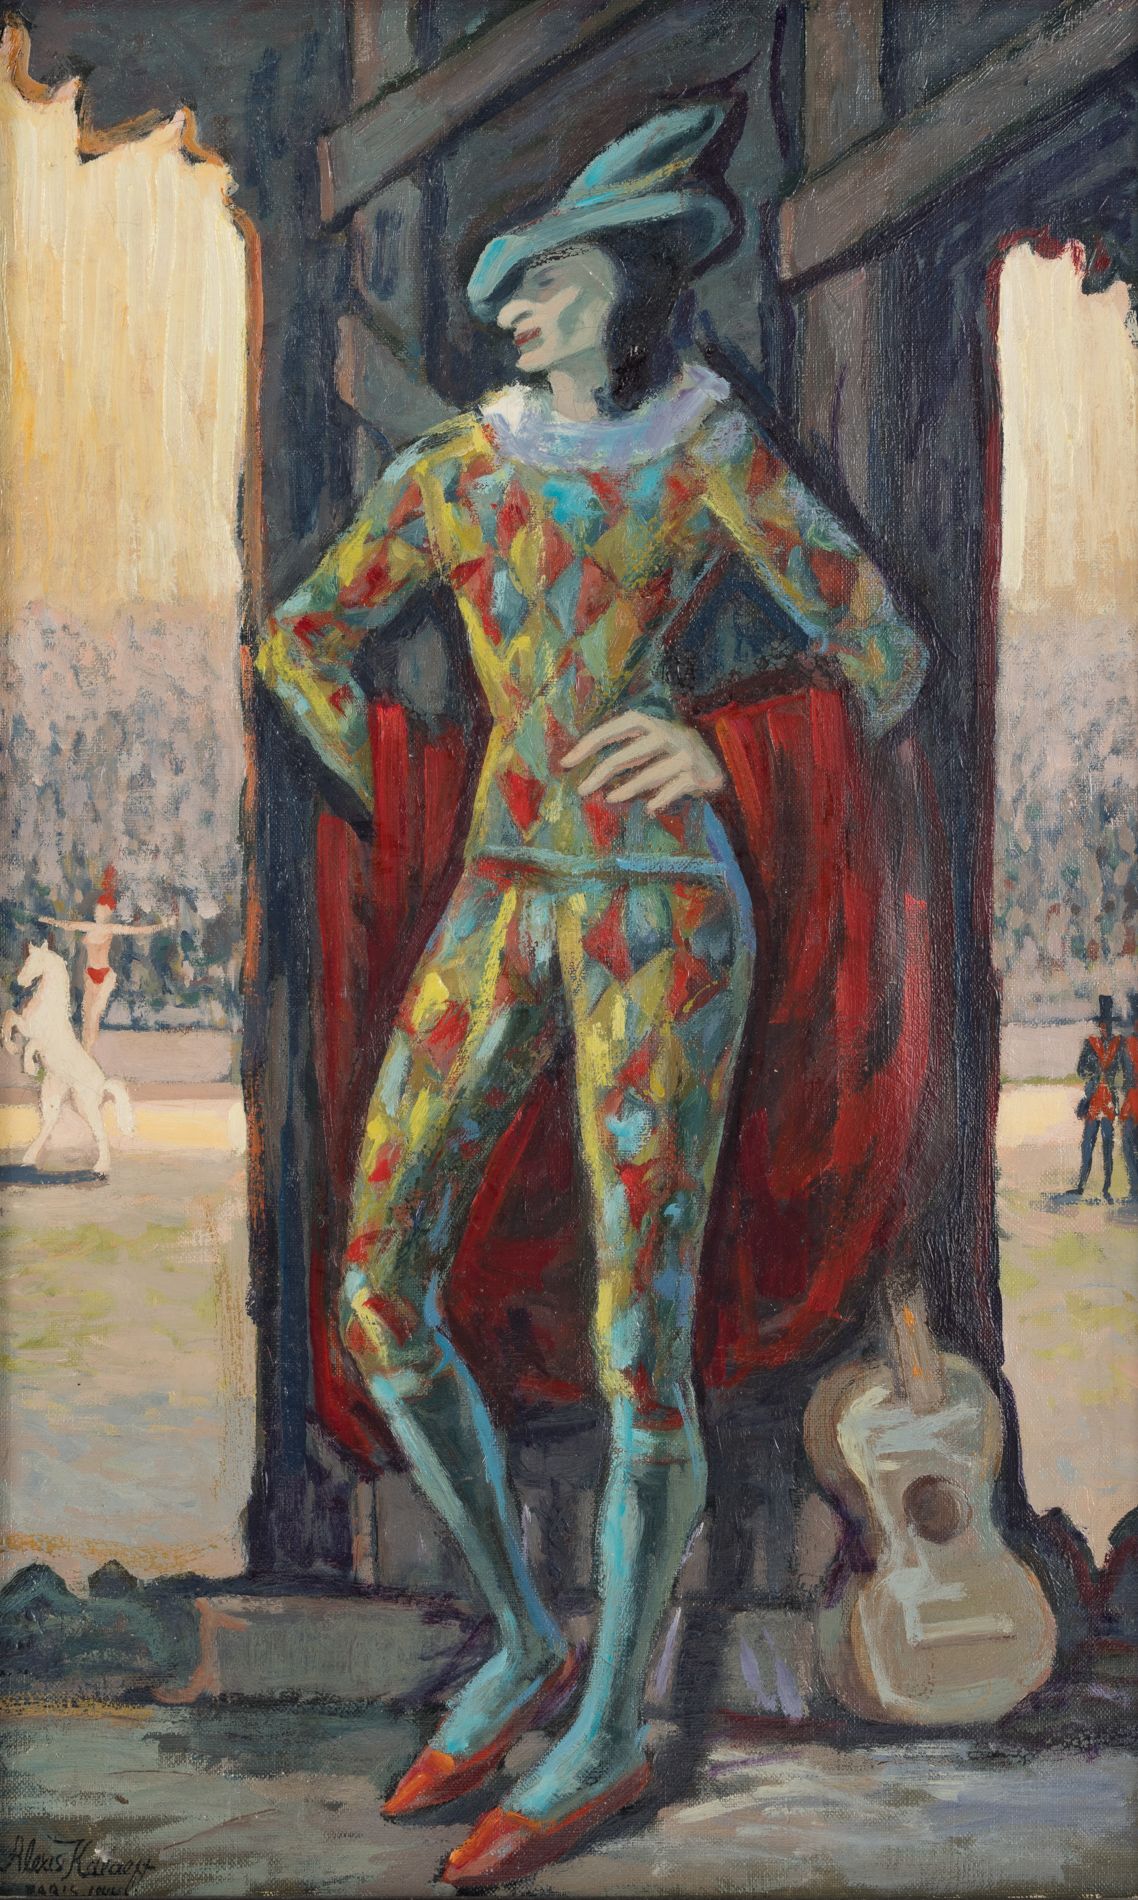 Null 亚历克西斯-卡拉夫 (1902-1978)
马戏团 
布面油画，左下方有签名，背面有会签和标题。 
尺寸：61 x 38 cm